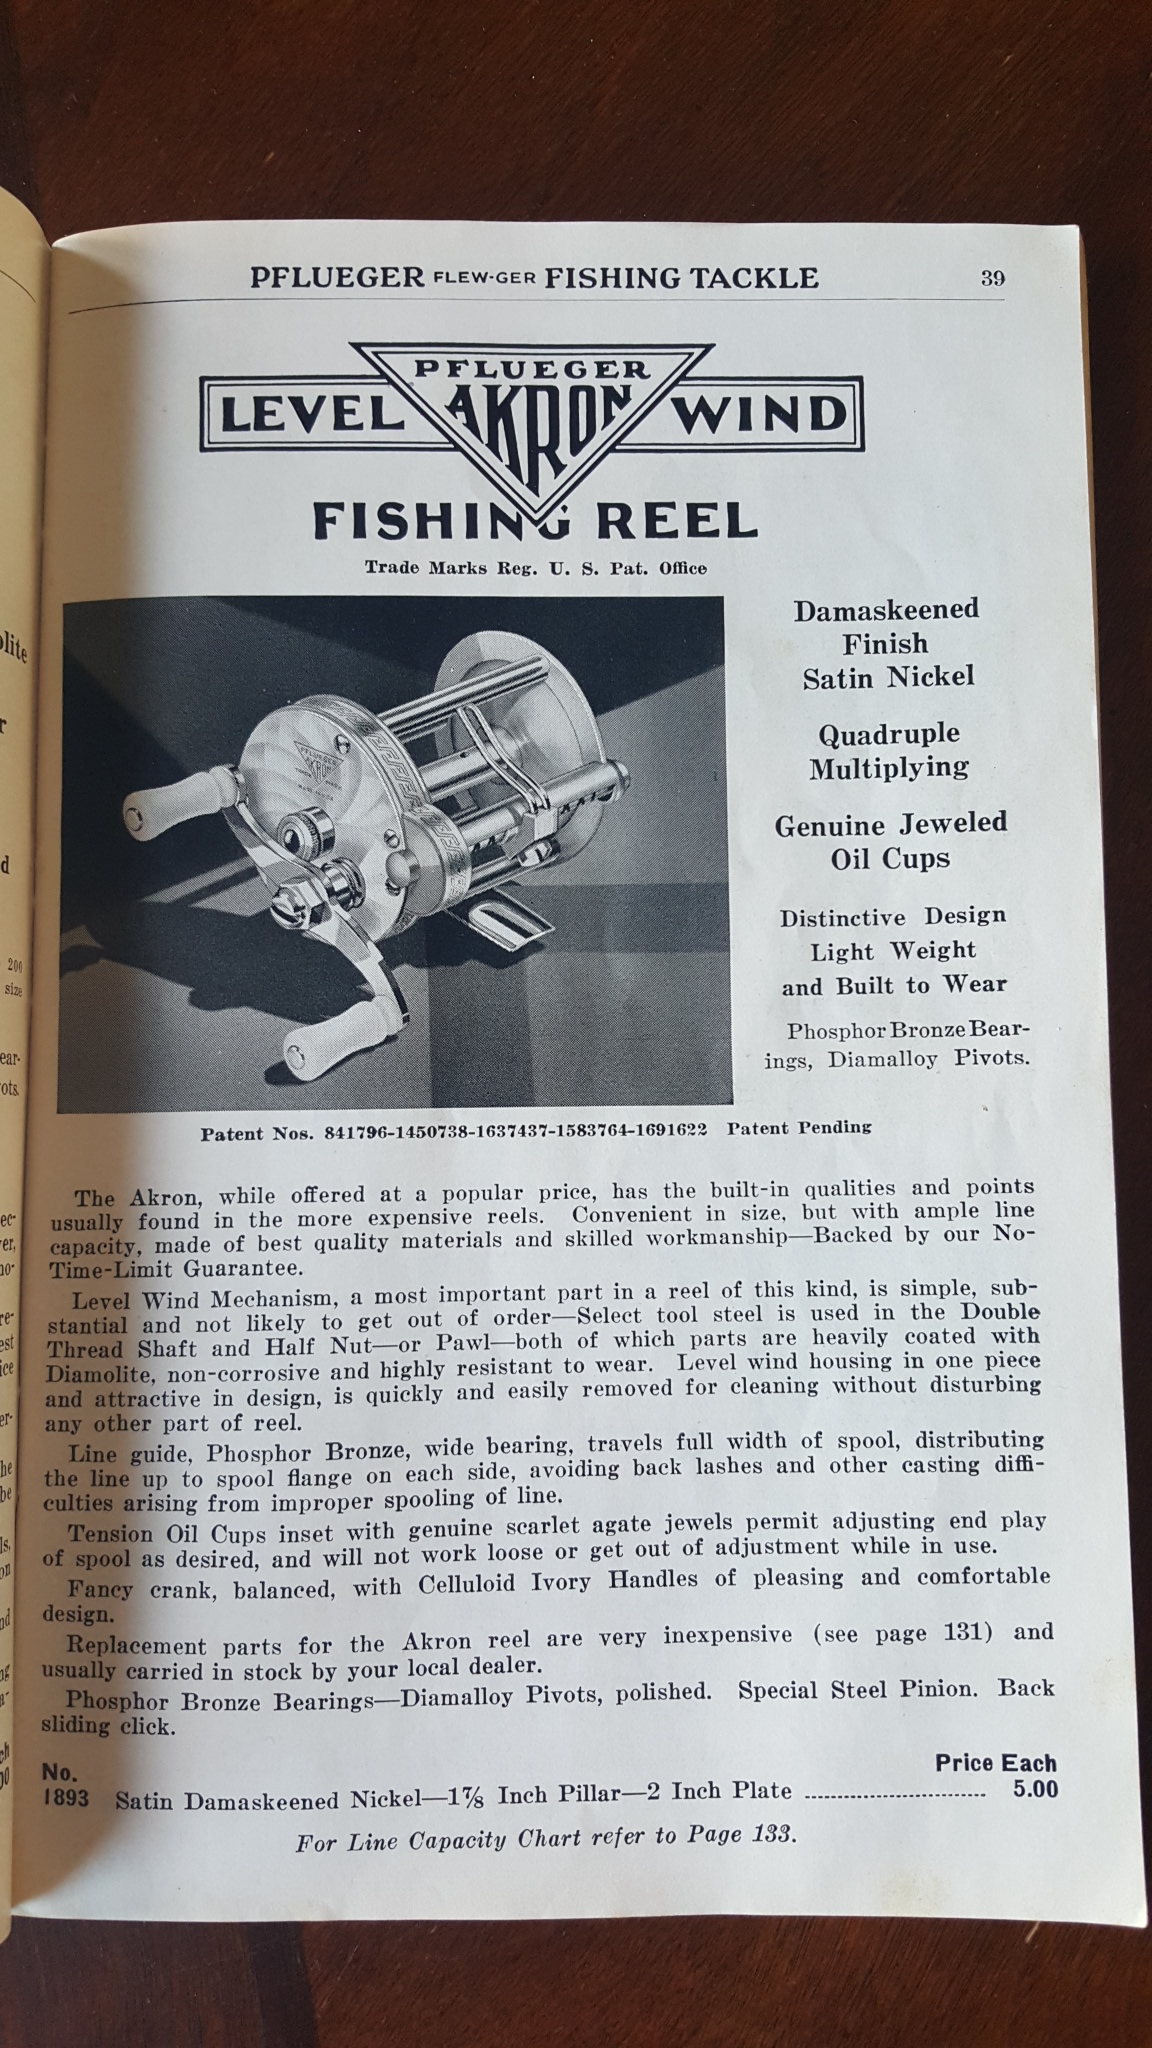 dating a Pflueger skilkast #1953 - Reel Talk - ORCA